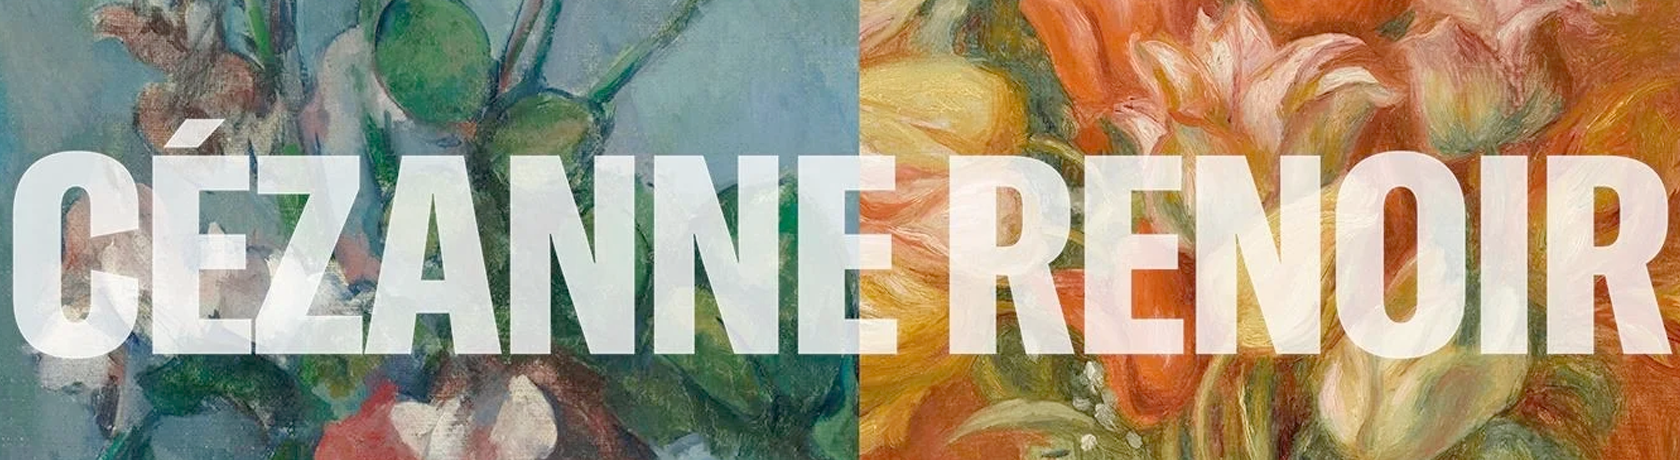 Cèzanne Renoir palazzo Reale Milano